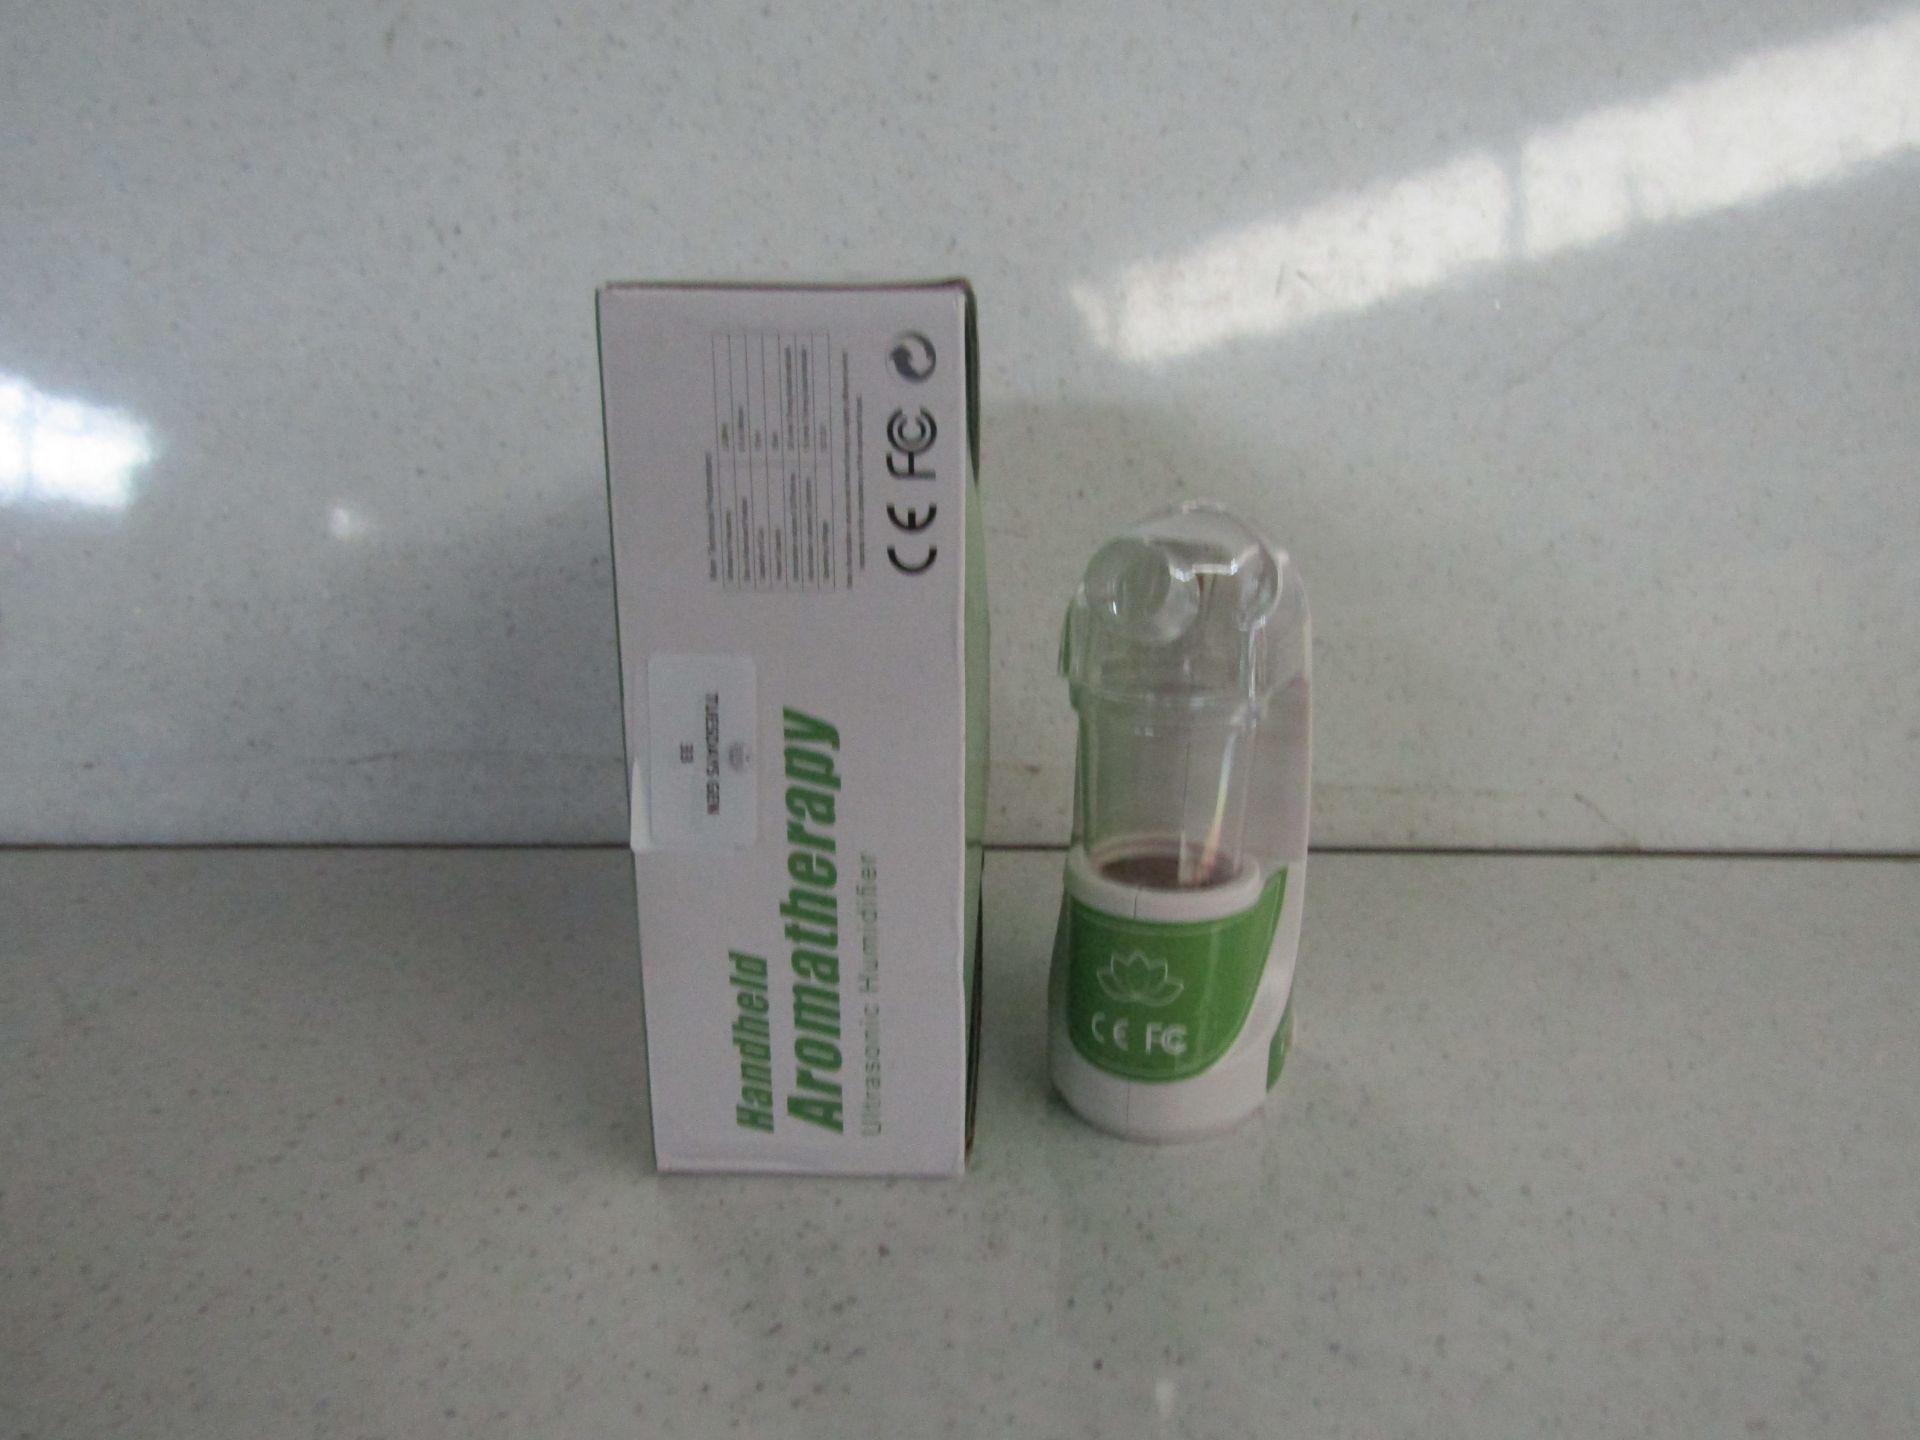 Handheld Aromatherapy Ultrasonic Dehumidifier - Unchecked & Boxed. - Image 2 of 6